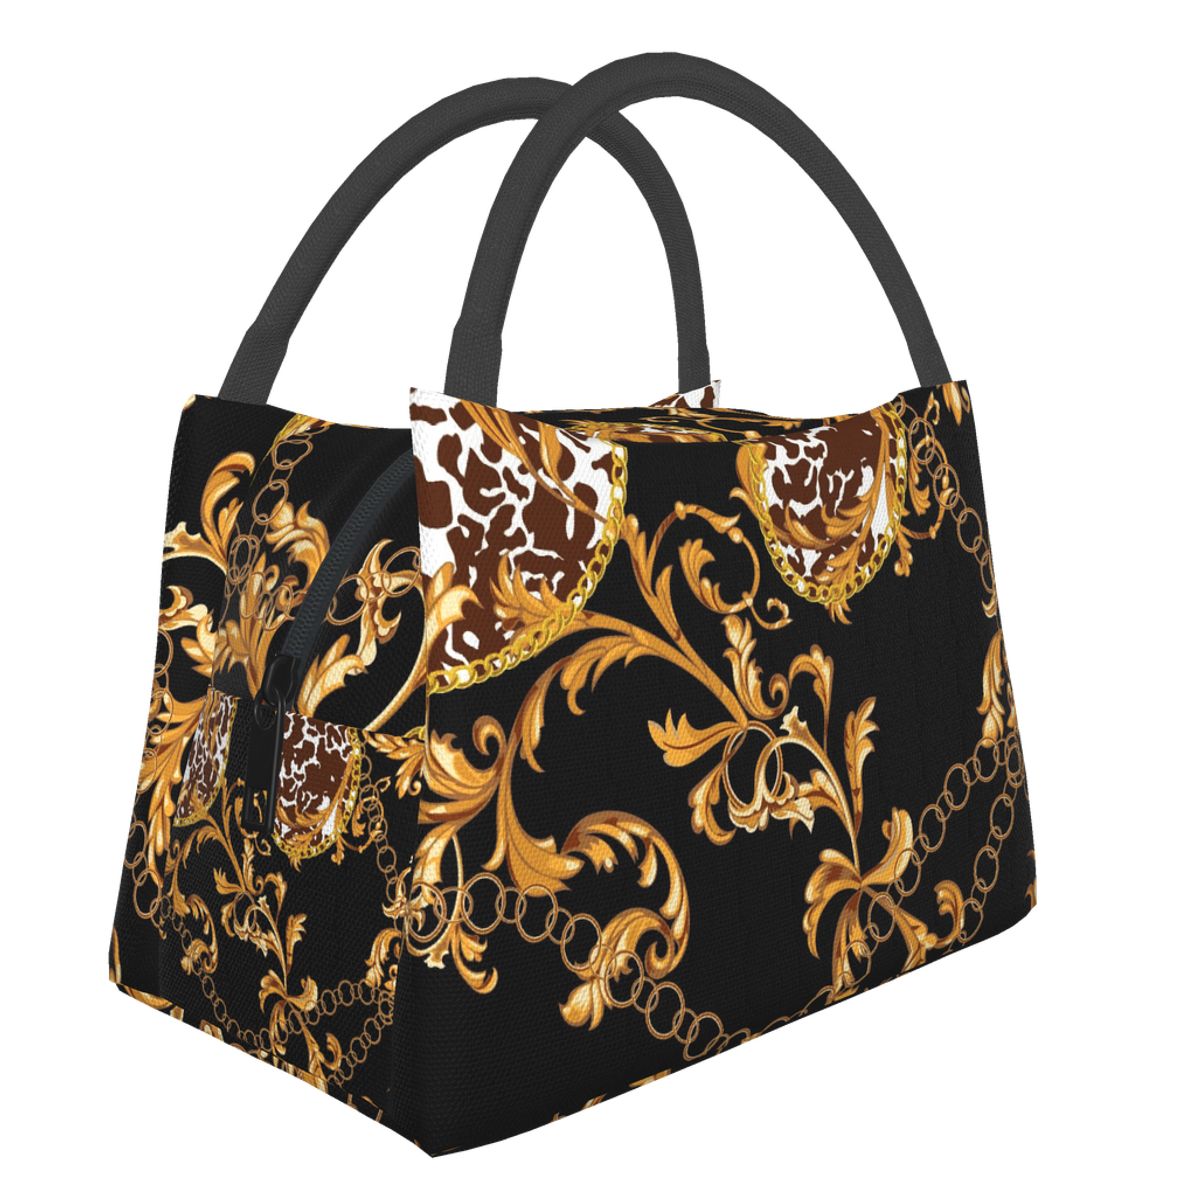 Ornate Golden Pillar Fashion Travel Handbag